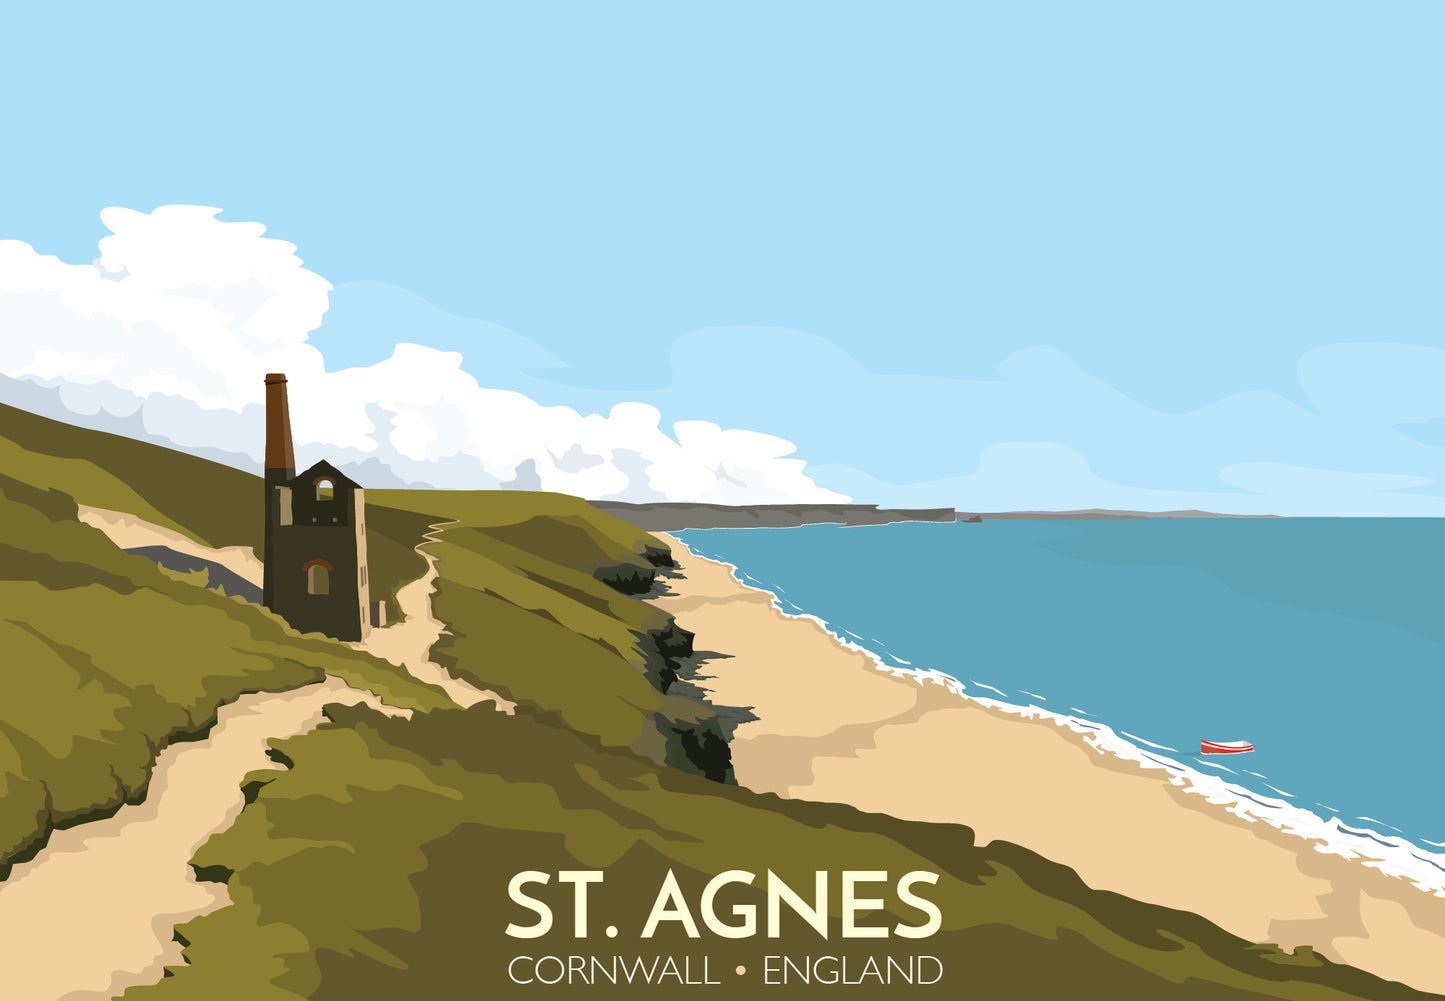 St. Agnes Travel Poster